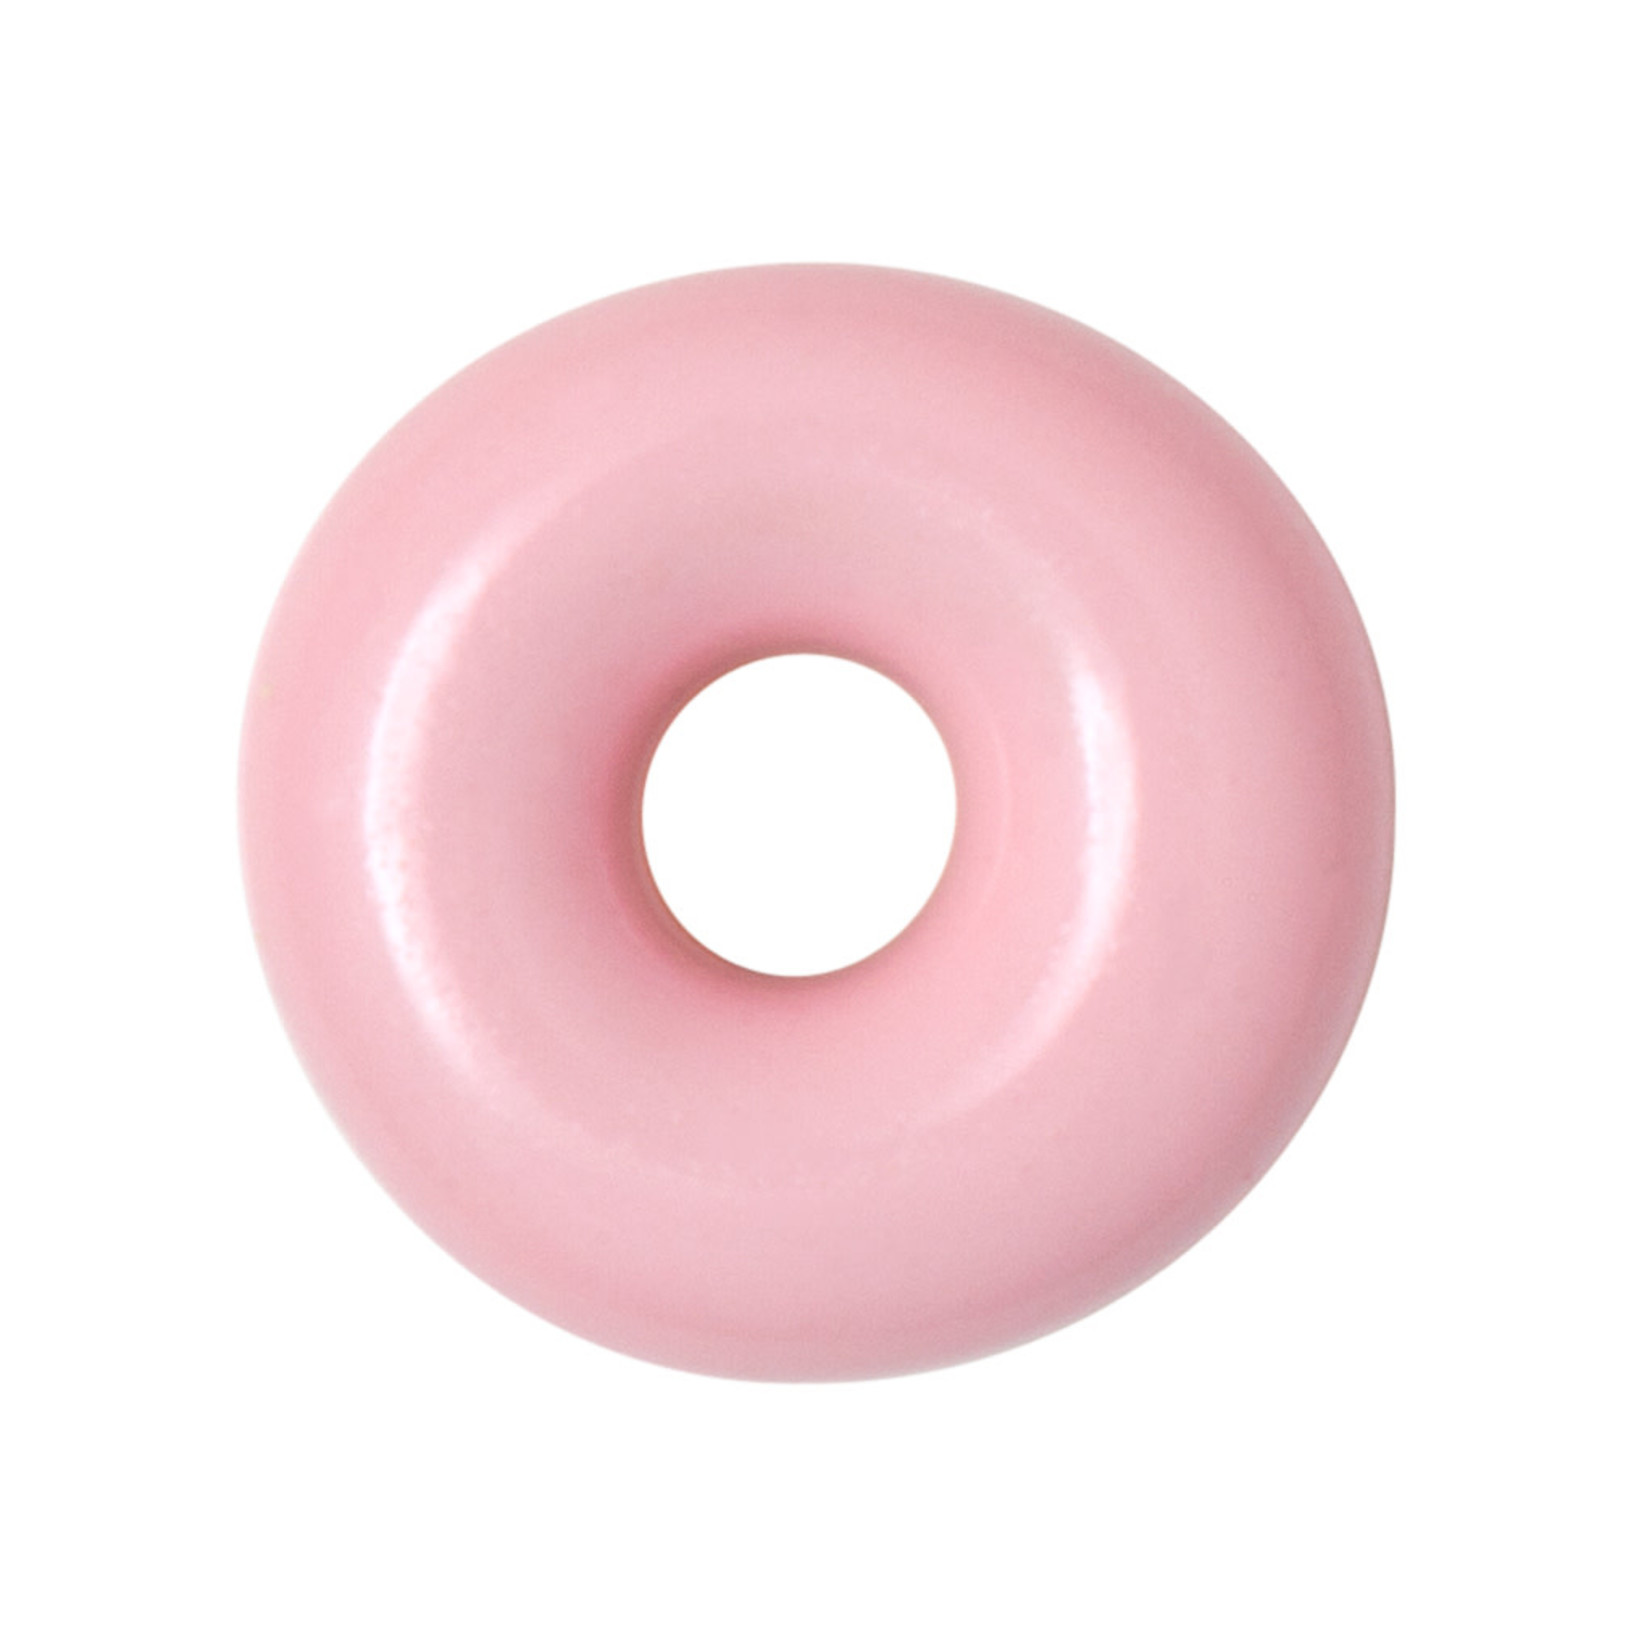 Lulu Donut  - Light Pink 1 Pcs